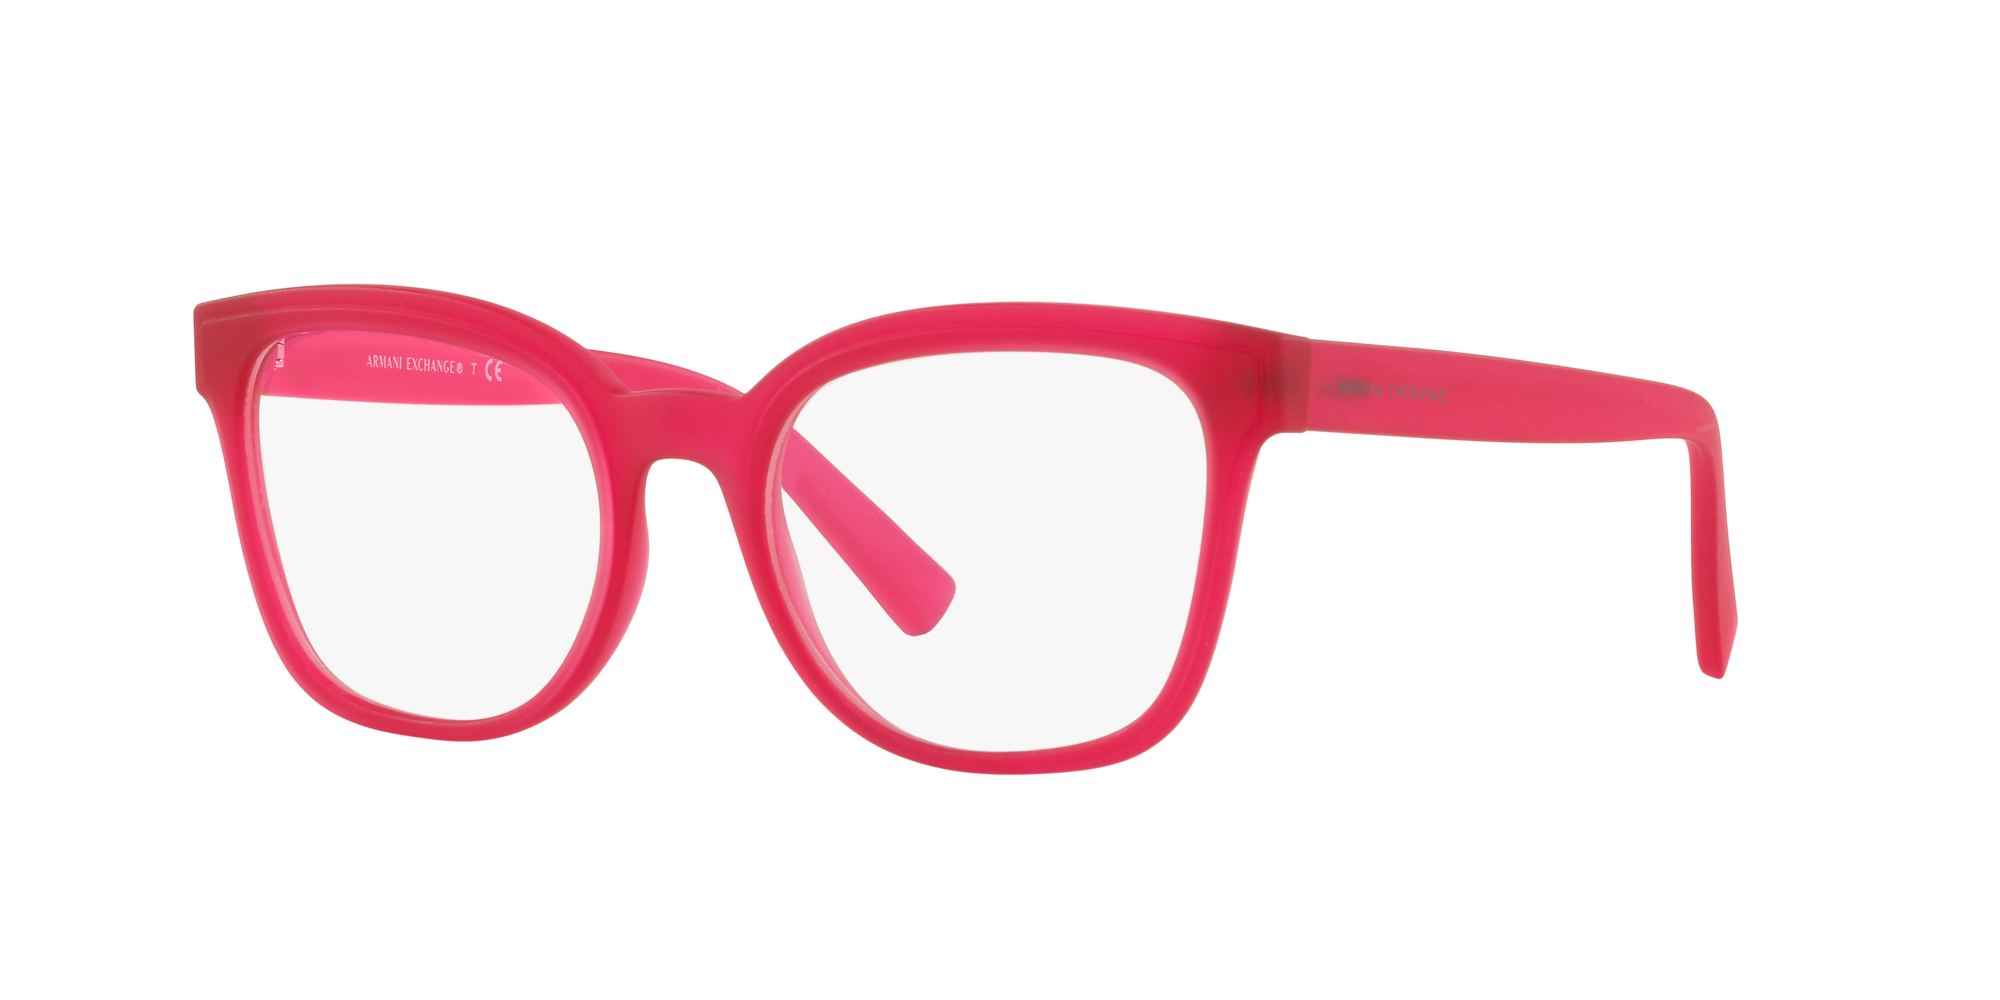 Armani Exchange Glasses Pink Sale, 58% OFF 